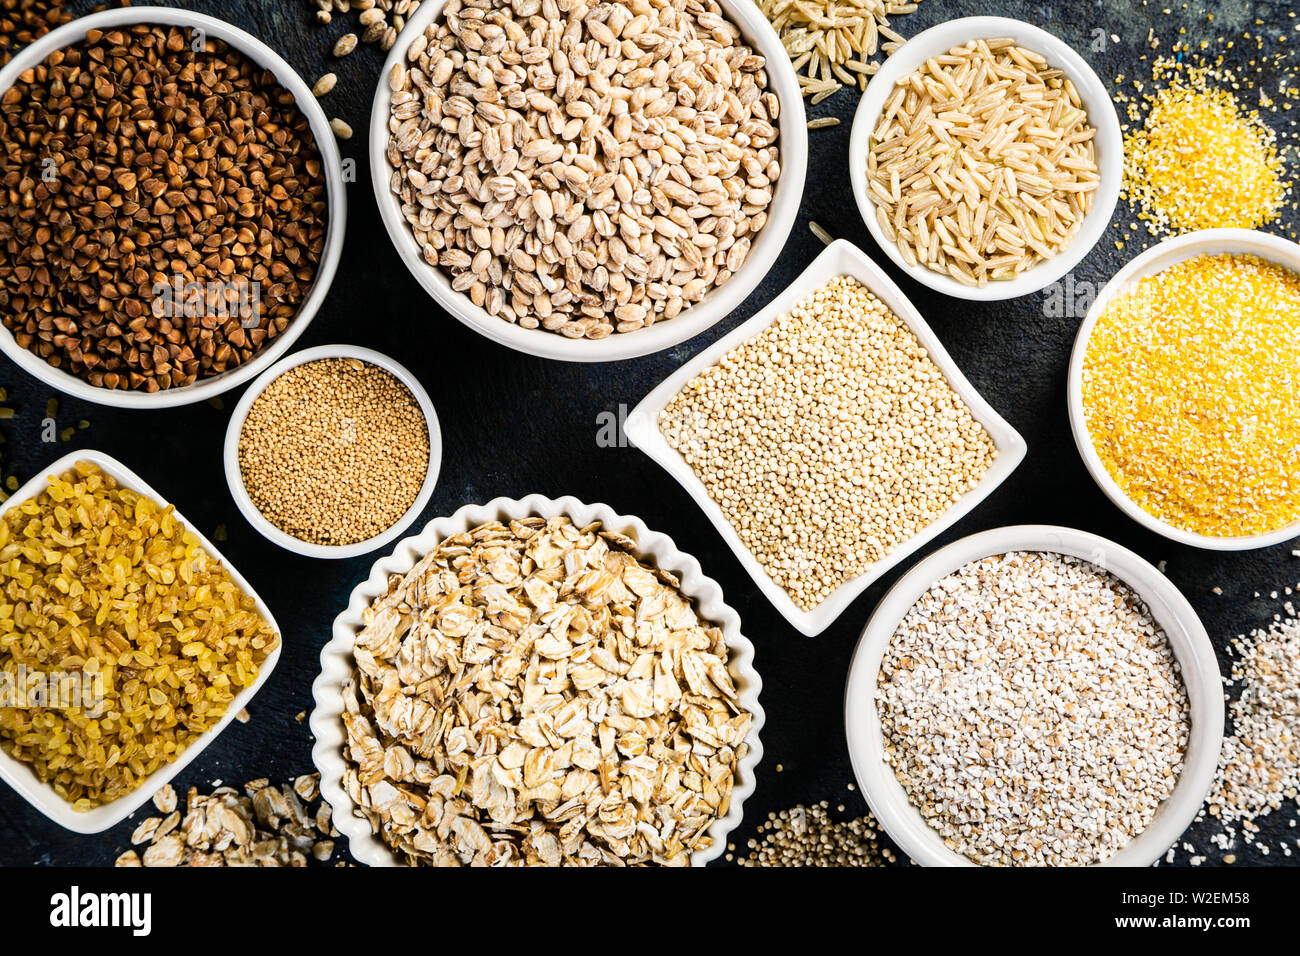 Selection of whole grains in white bowls - rice, oats, buckwheat, bulgur, porridge, barley, quinoa, amaranth Stock Photo